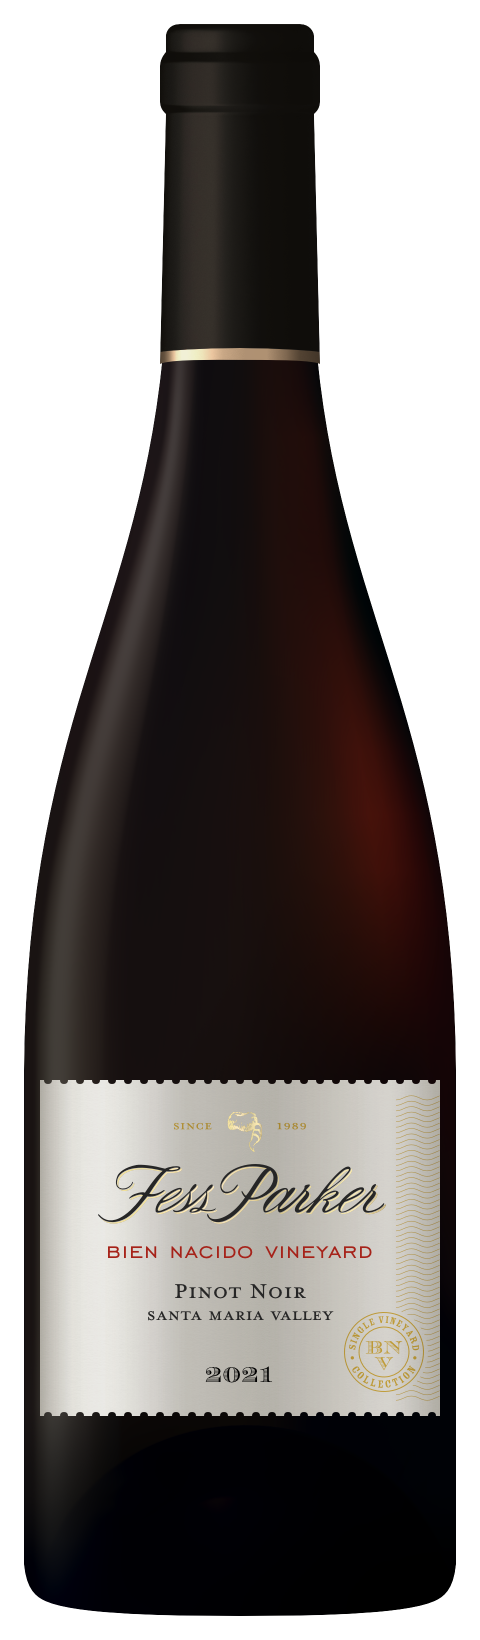 Bottle shot of Bien Nacido Vineyard Pinot Noir